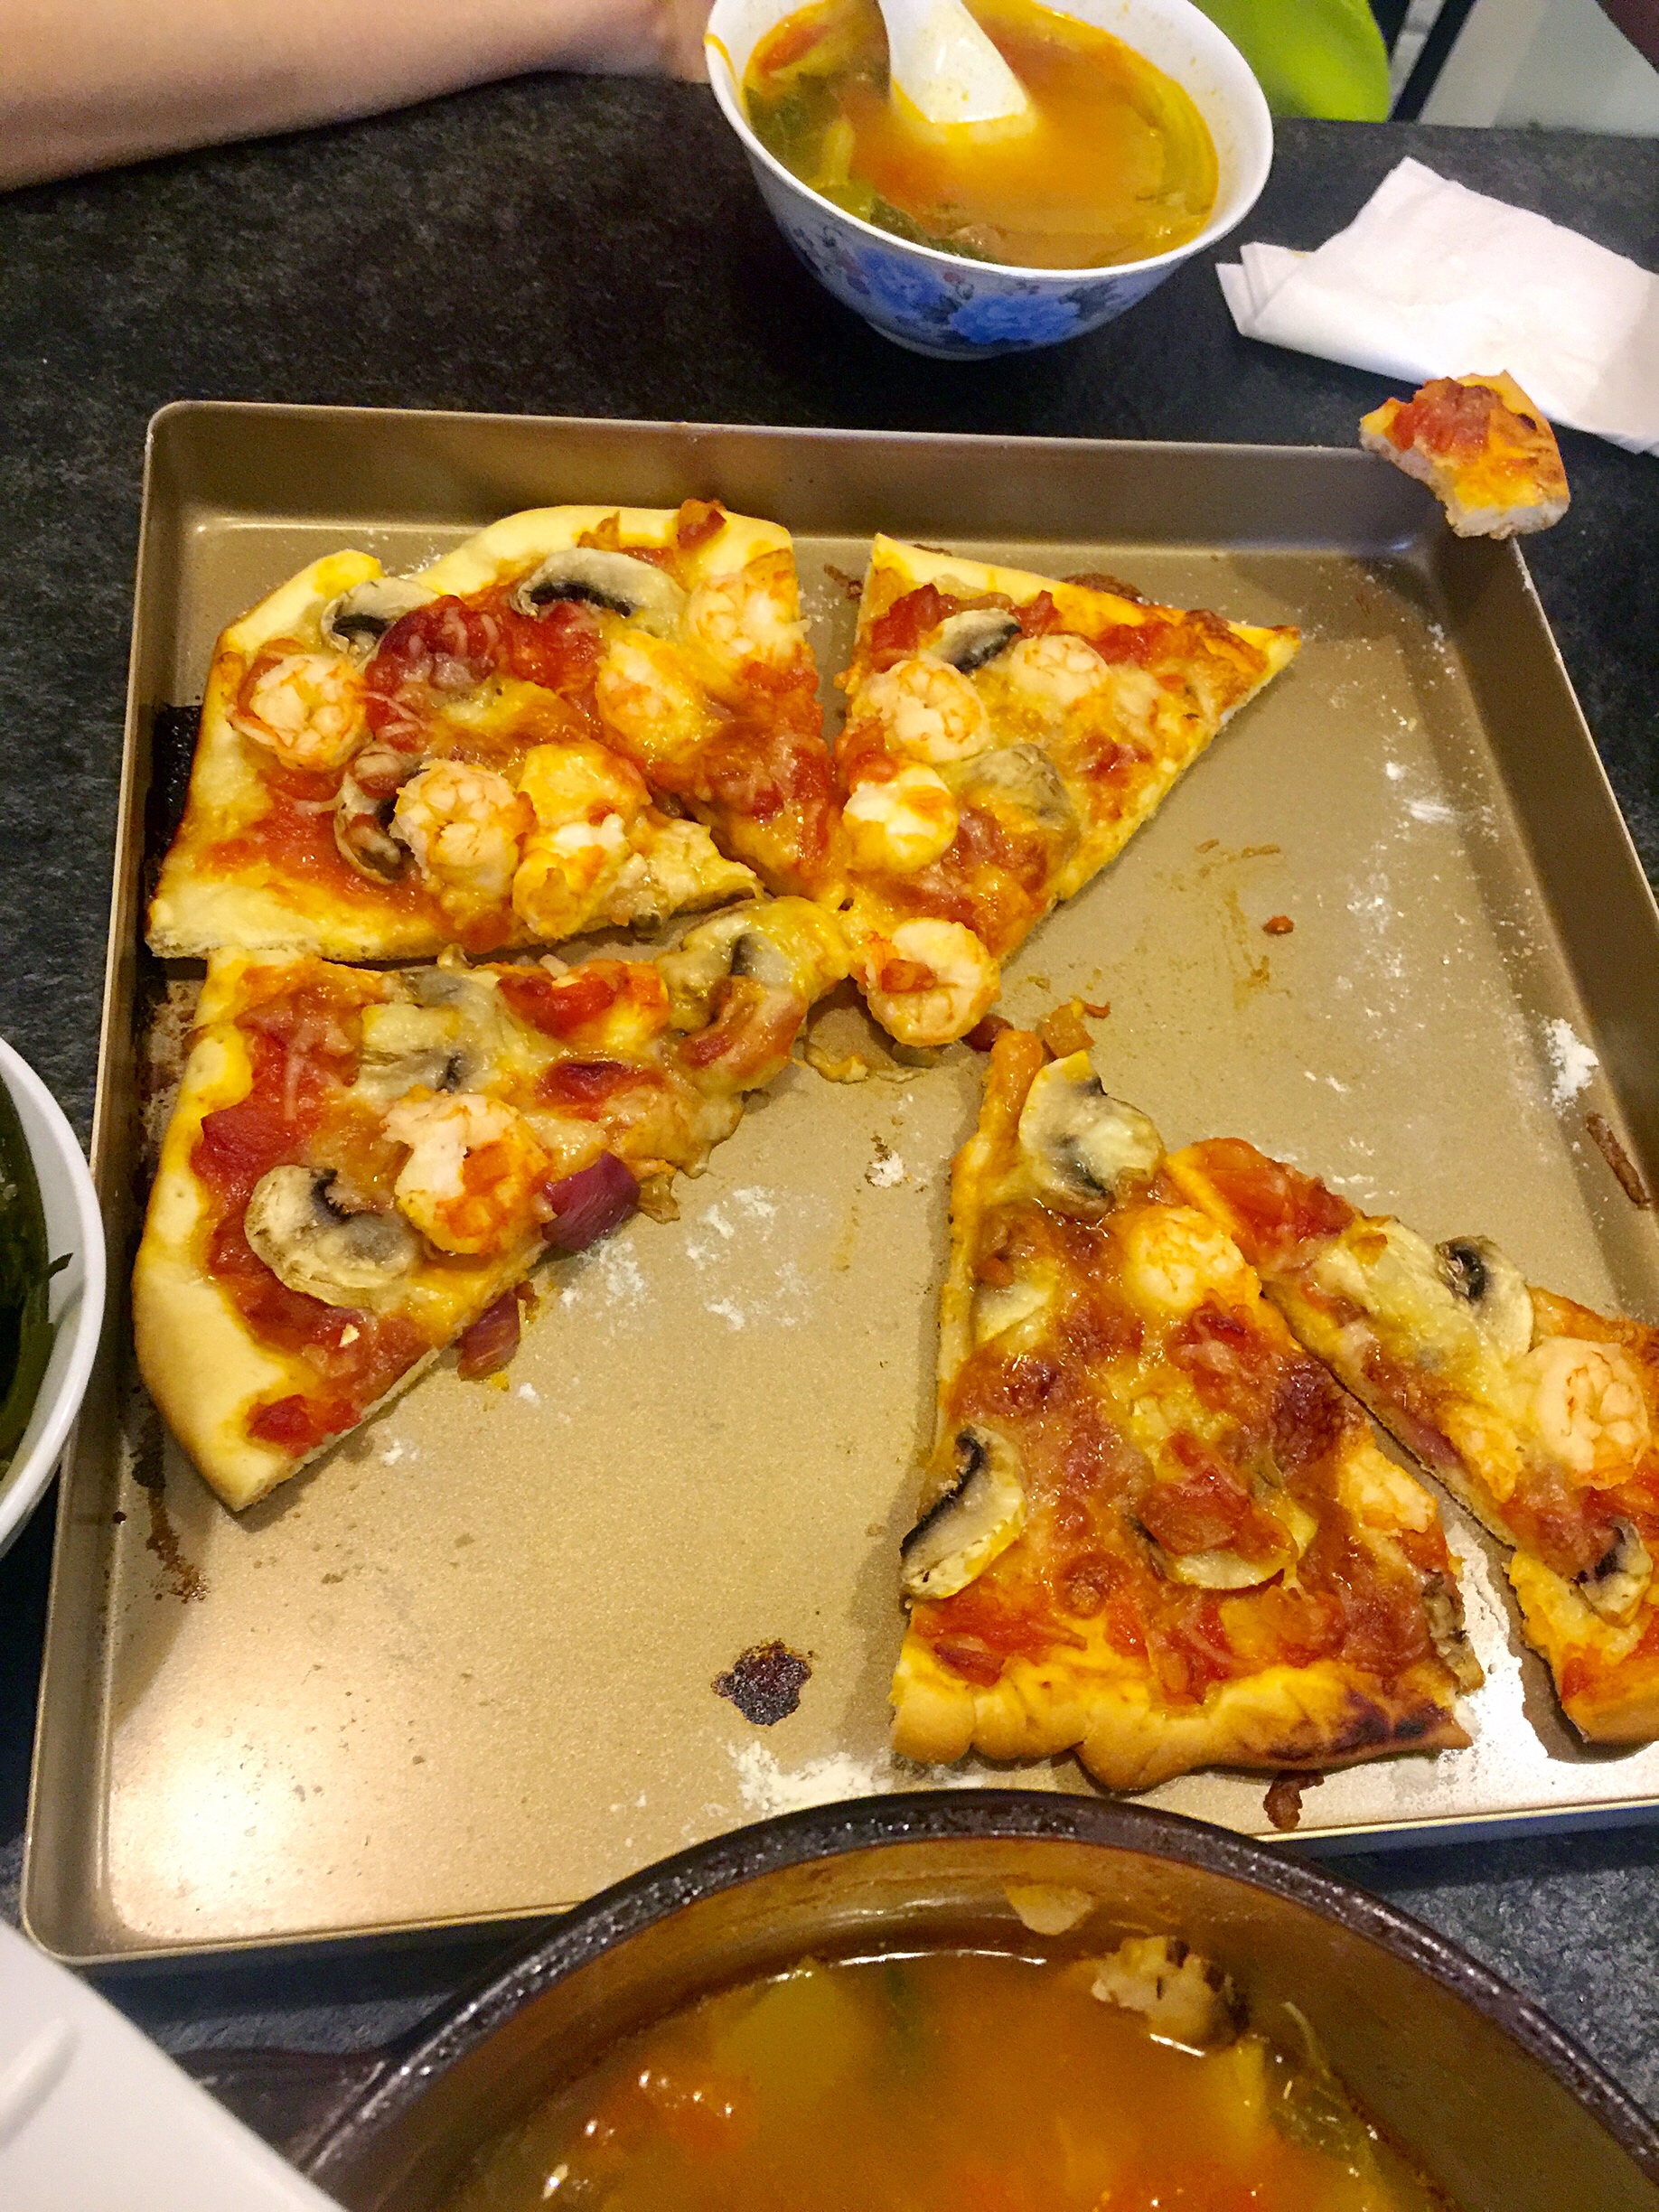 lisa自制披萨的做法